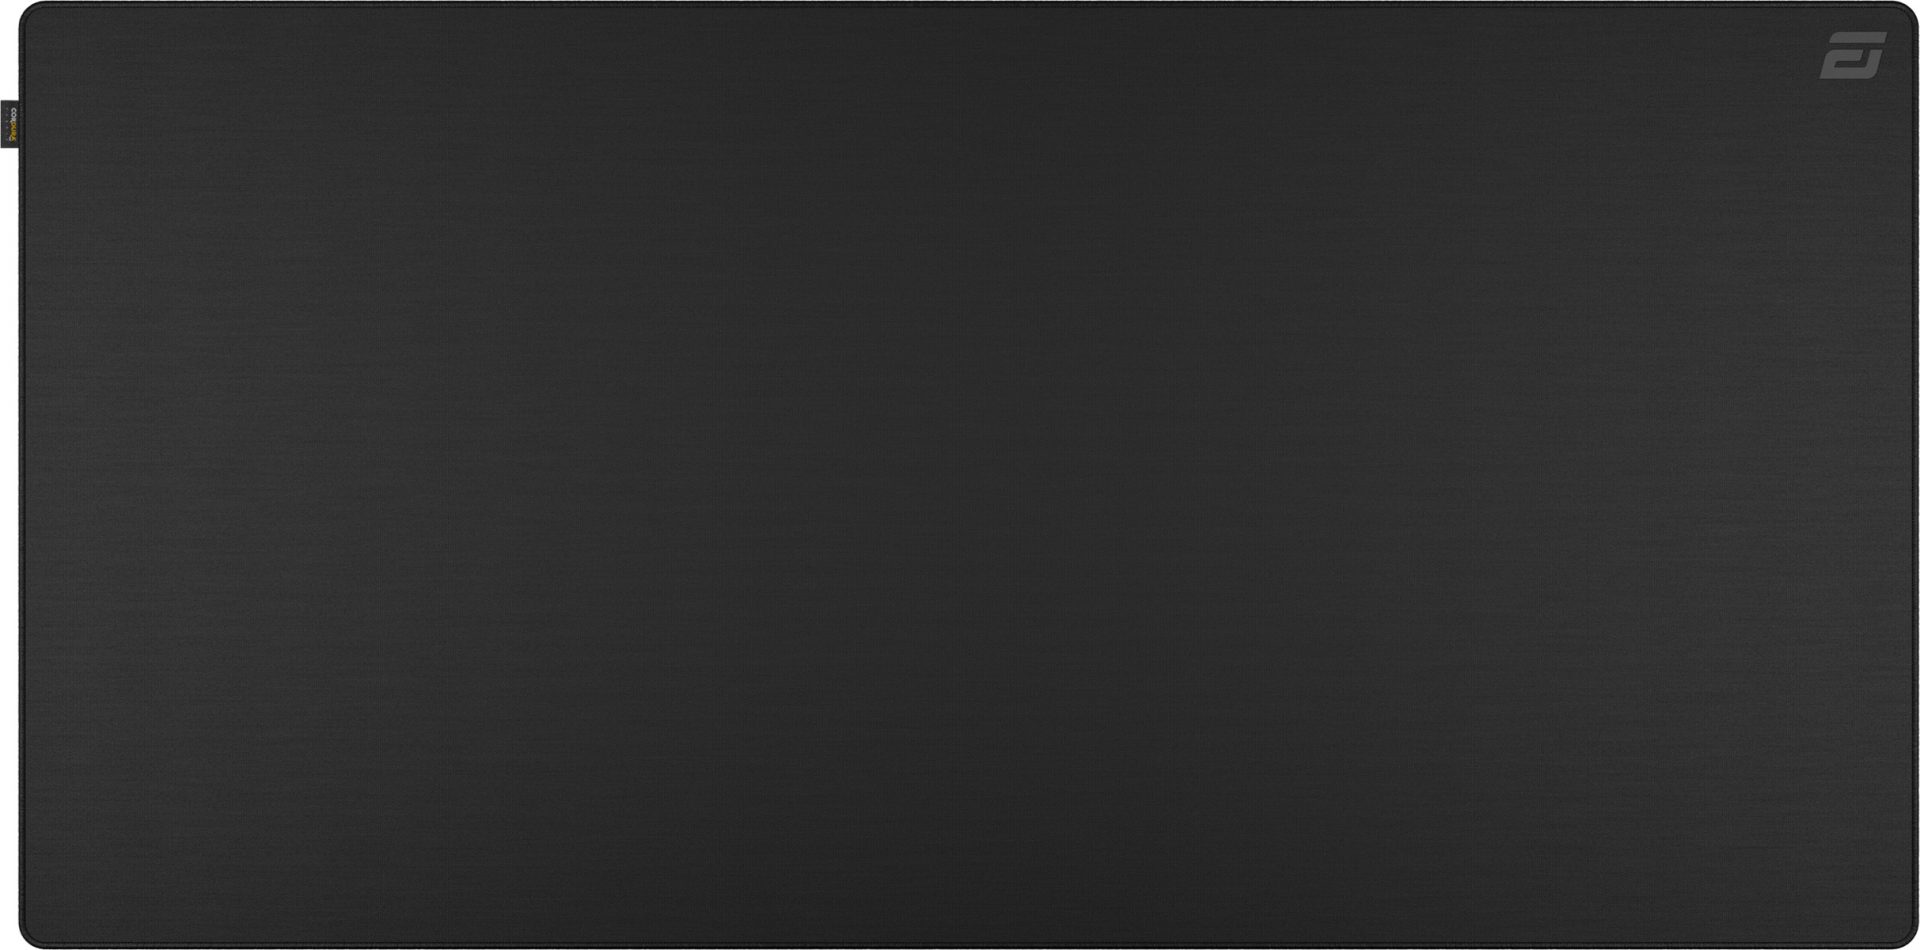 Endgame Gear MPC-890 Cordura Gaming Mousepad - black - Pro GamersWare 1.28.63.12.005